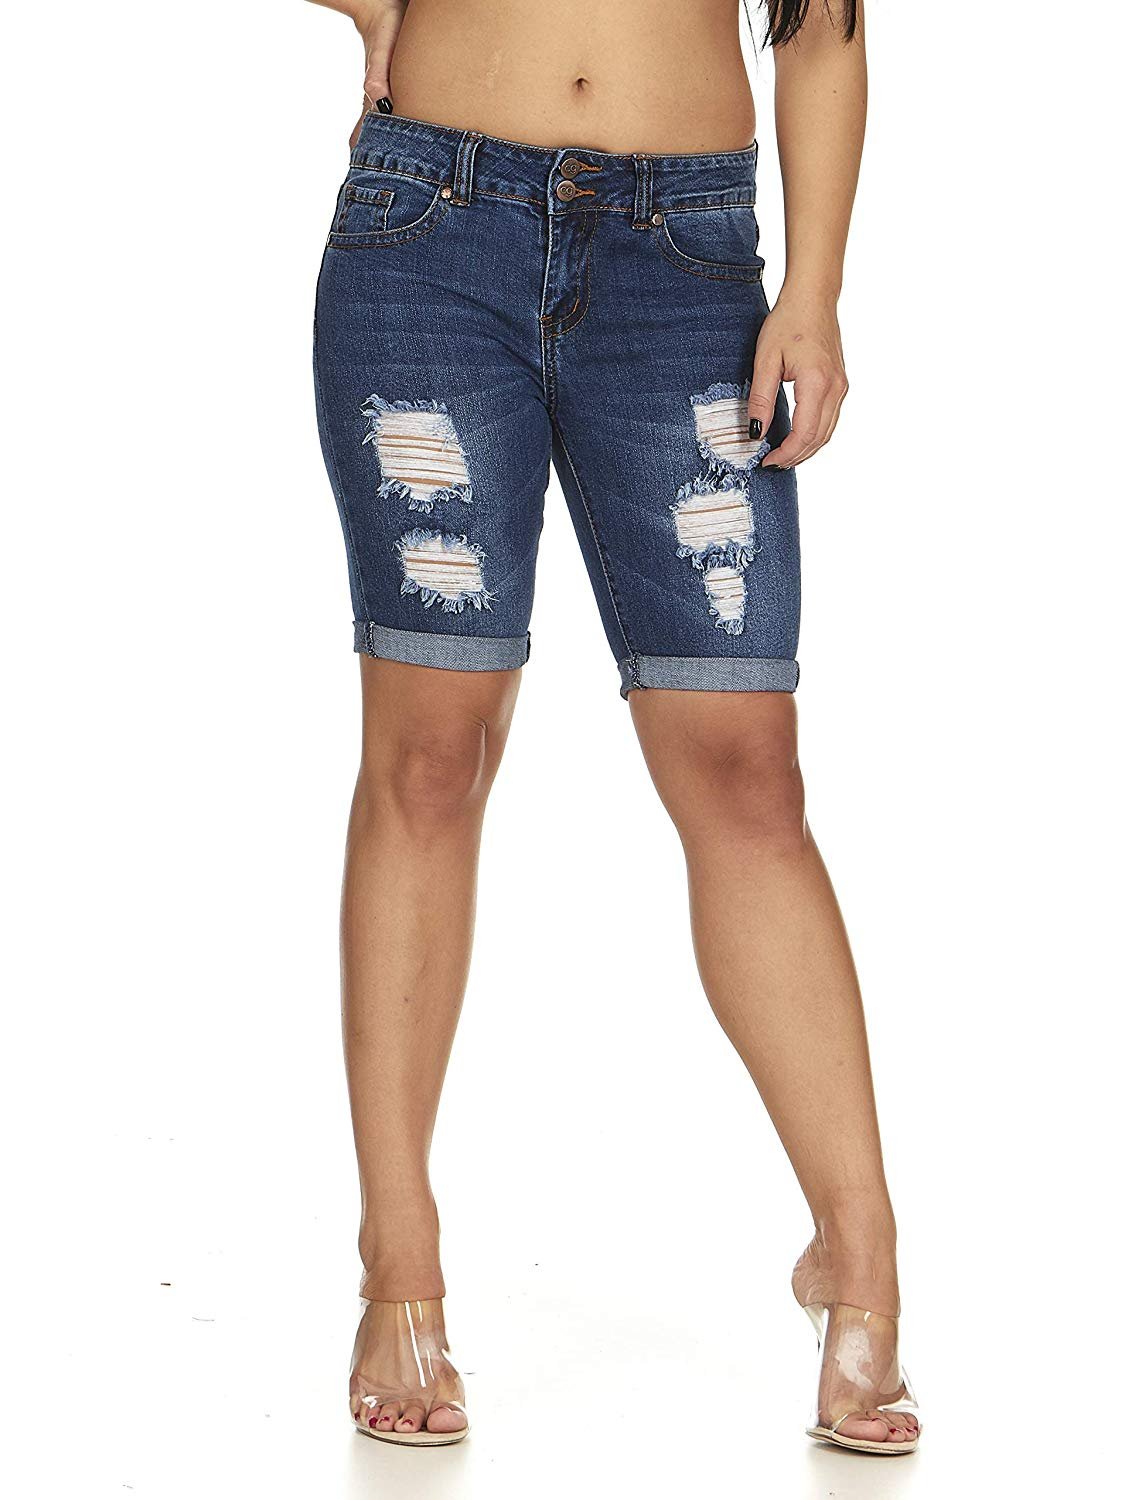 VIP JEANS Cute Jean Bib Strap Pocket Shortalls for Teen Girls Denim Shorts Slim Fit Army Print X-Large - image 4 of 10